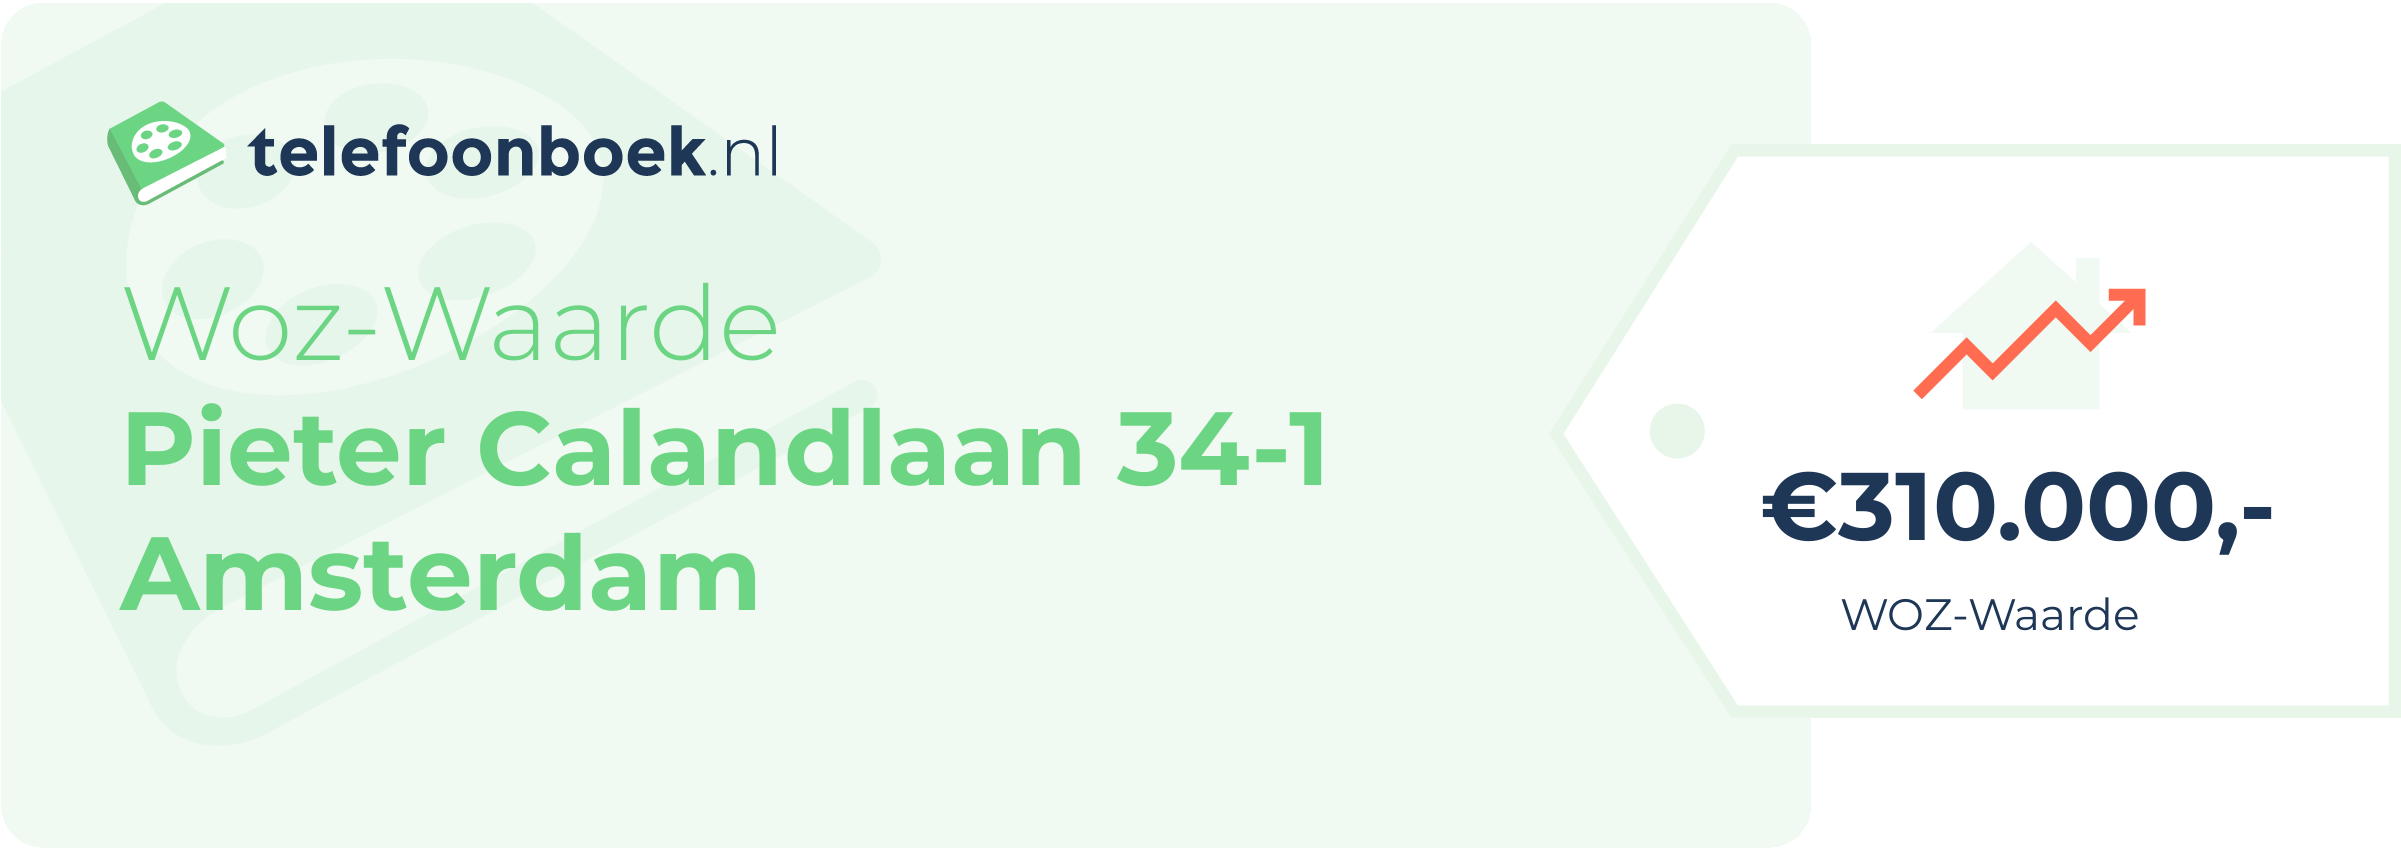 WOZ-waarde Pieter Calandlaan 34-1 Amsterdam